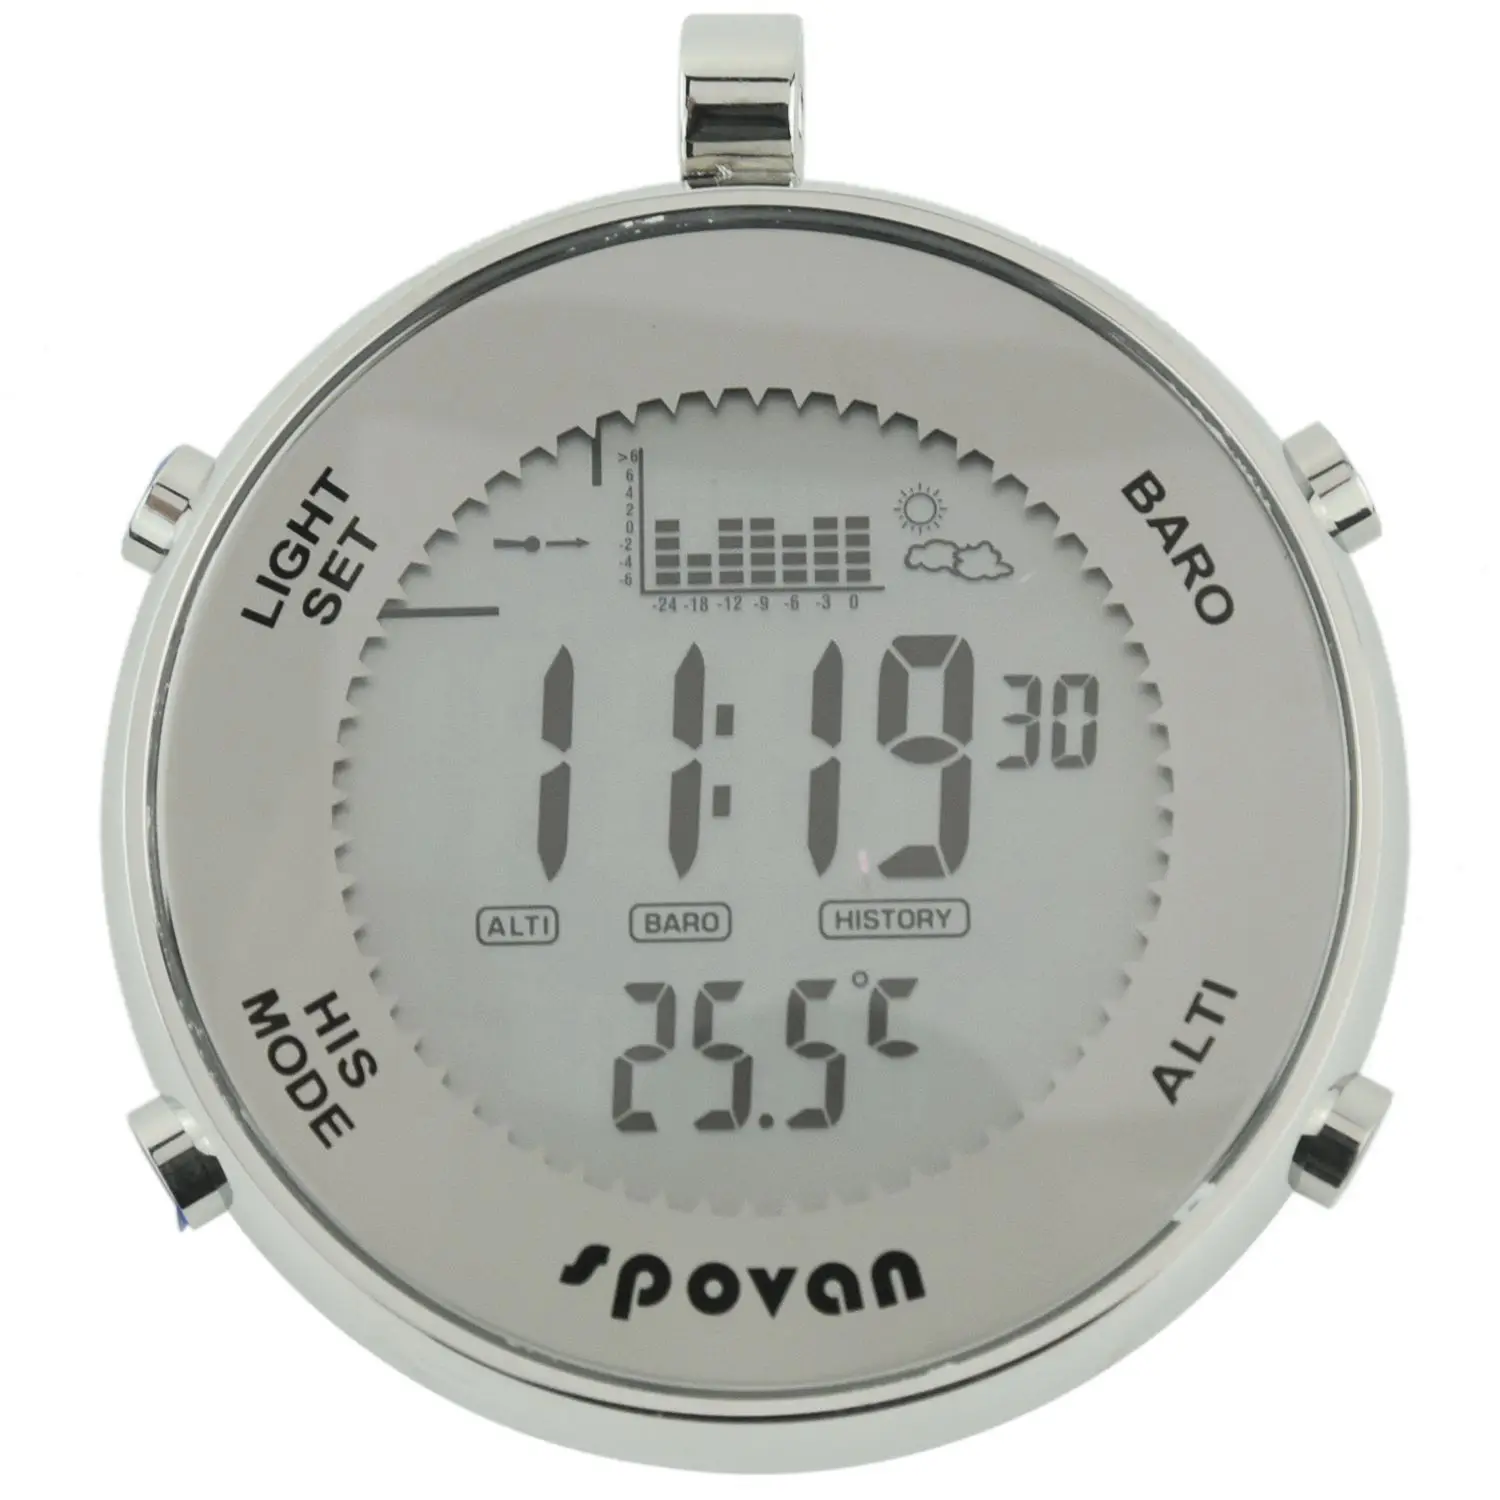 

Spovan SPV600 Outdoor Waterproof Pocket Watch Unisex Multifunctional Sport Watch